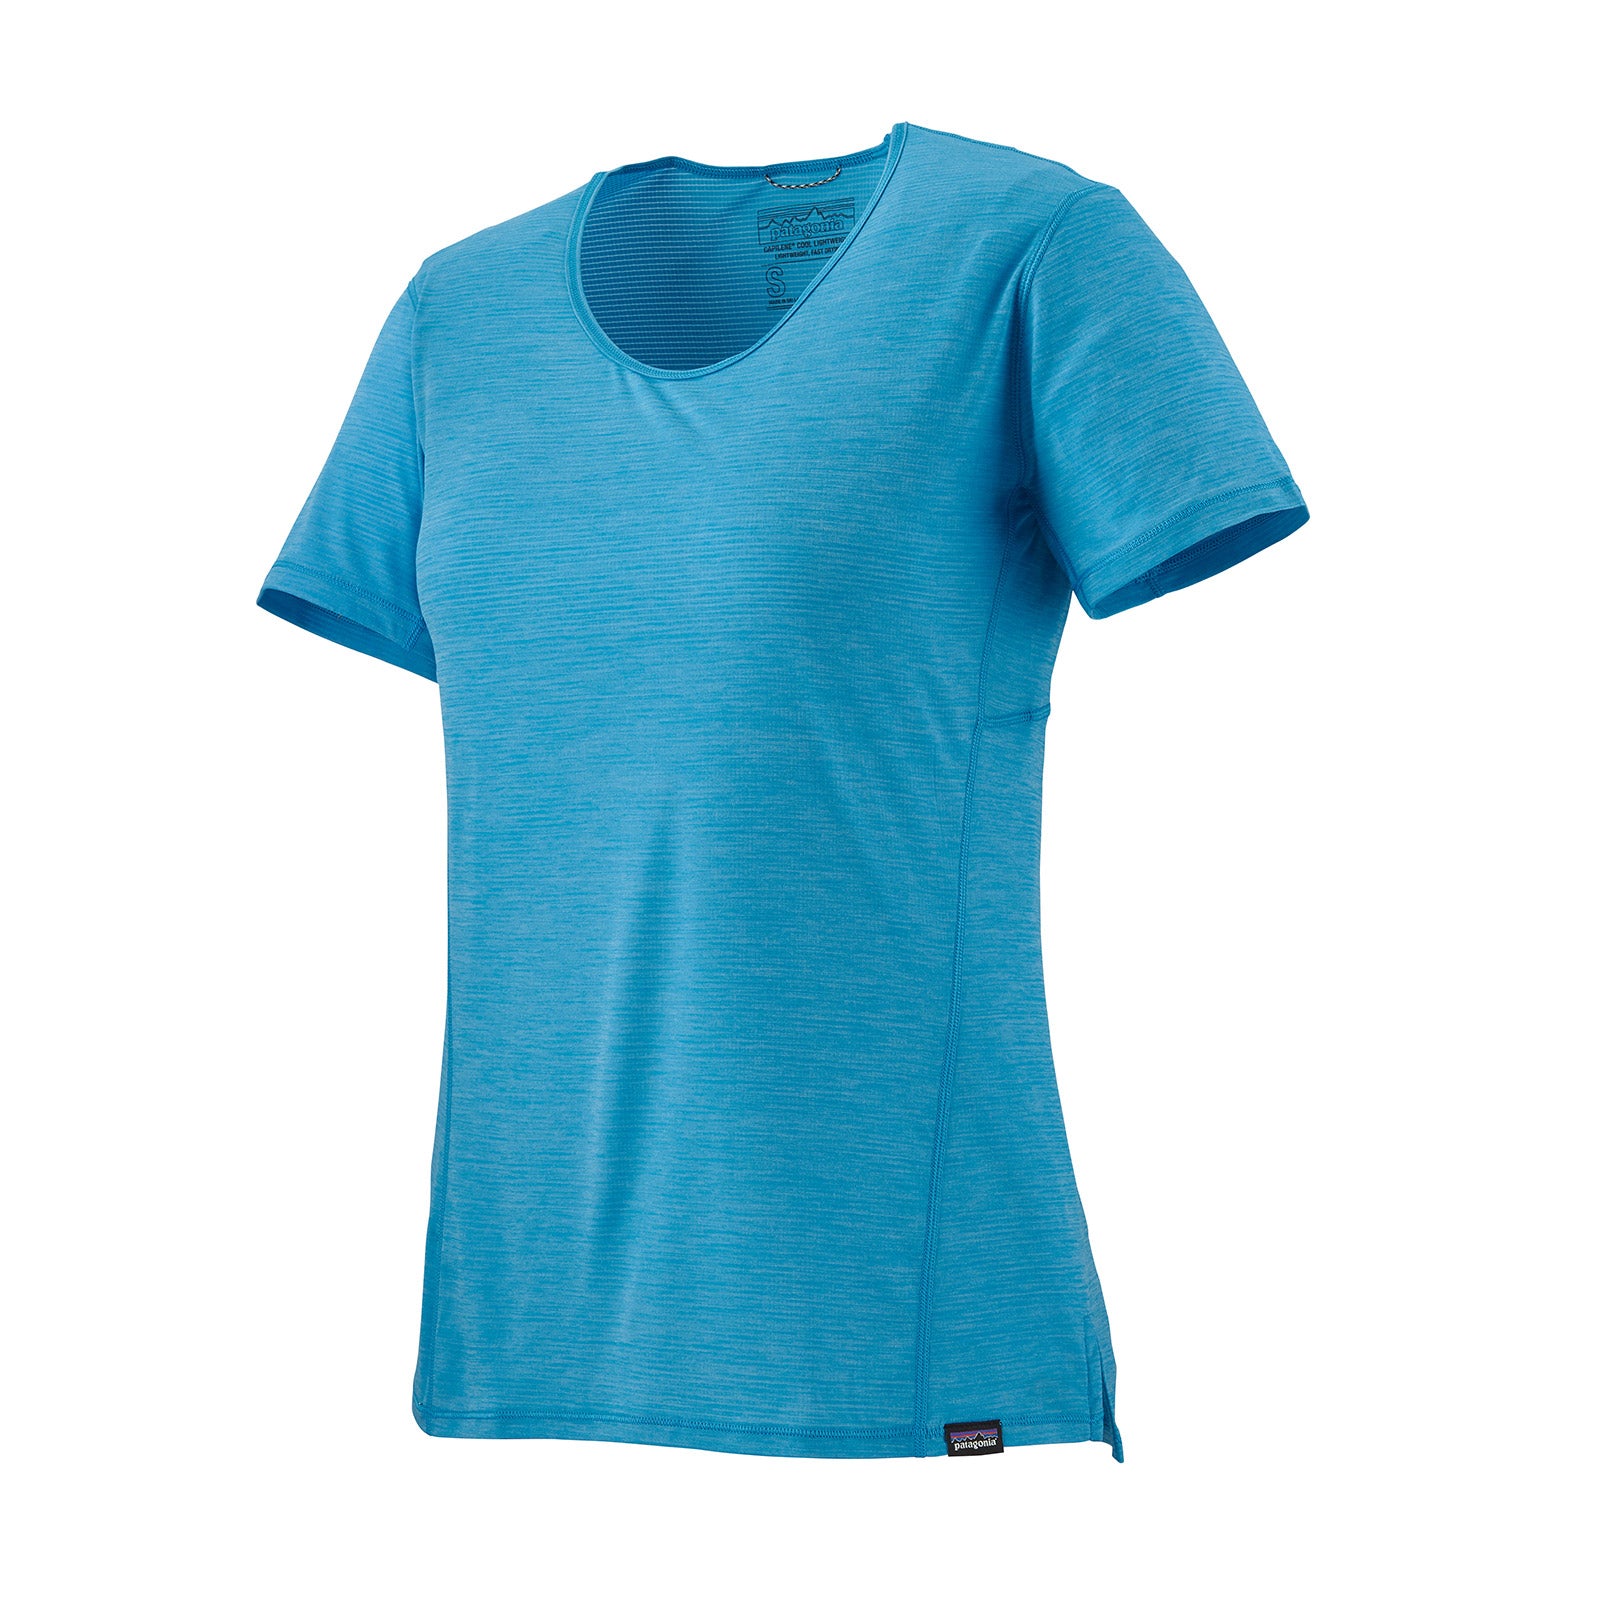 Patagonia womens capilene cool lightweight short sleeve shirt in joya blue